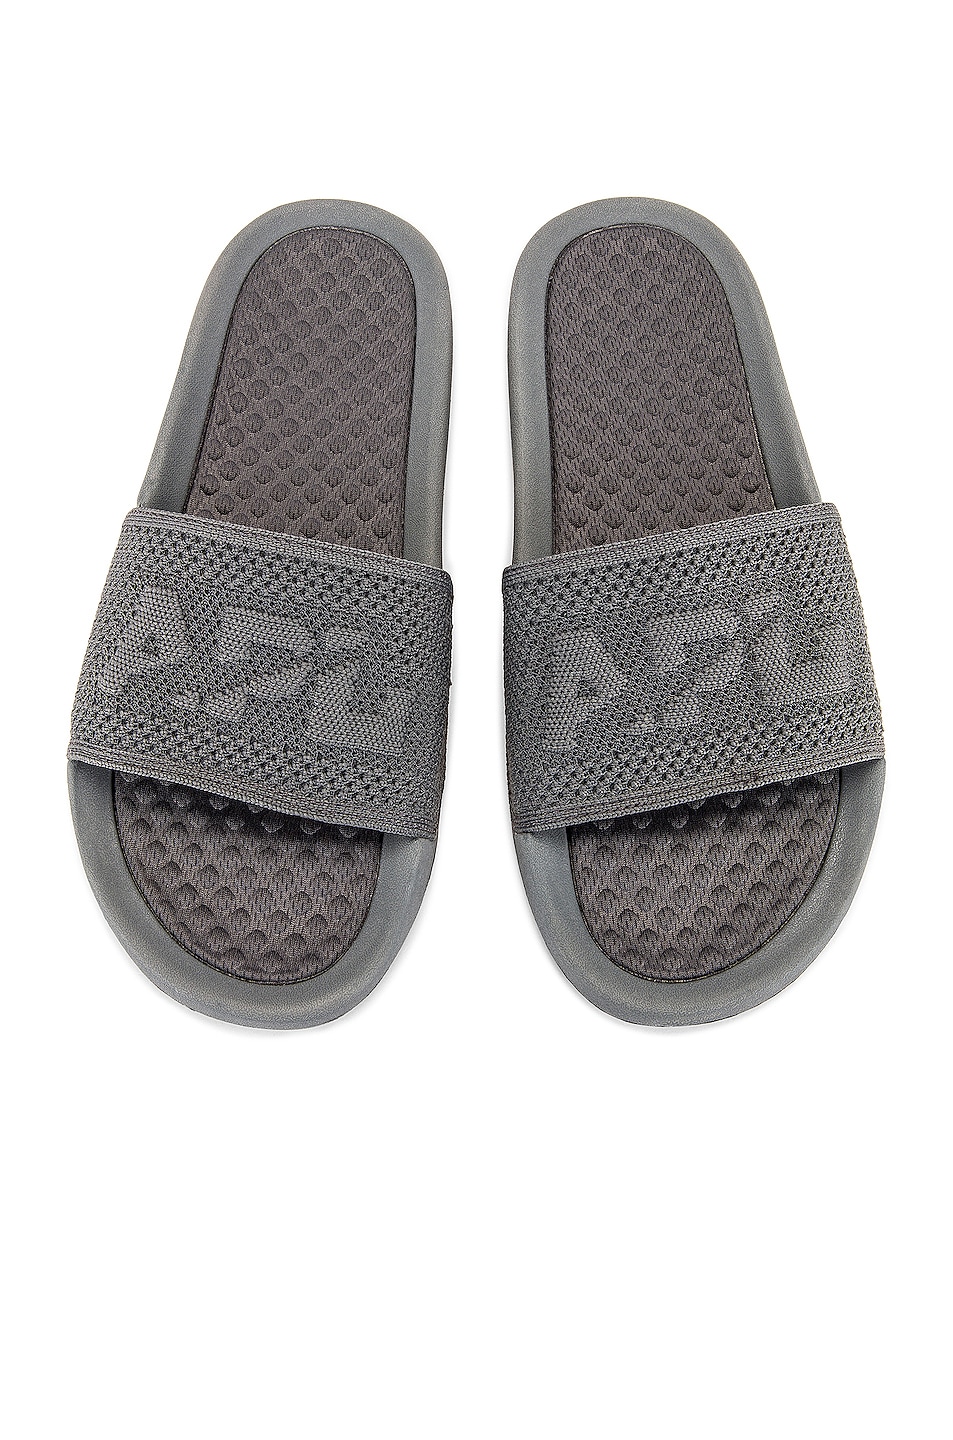 Image 1 of APL: Athletic Propulsion Labs Big Logo TechLoom Slide in Cosmic Grey